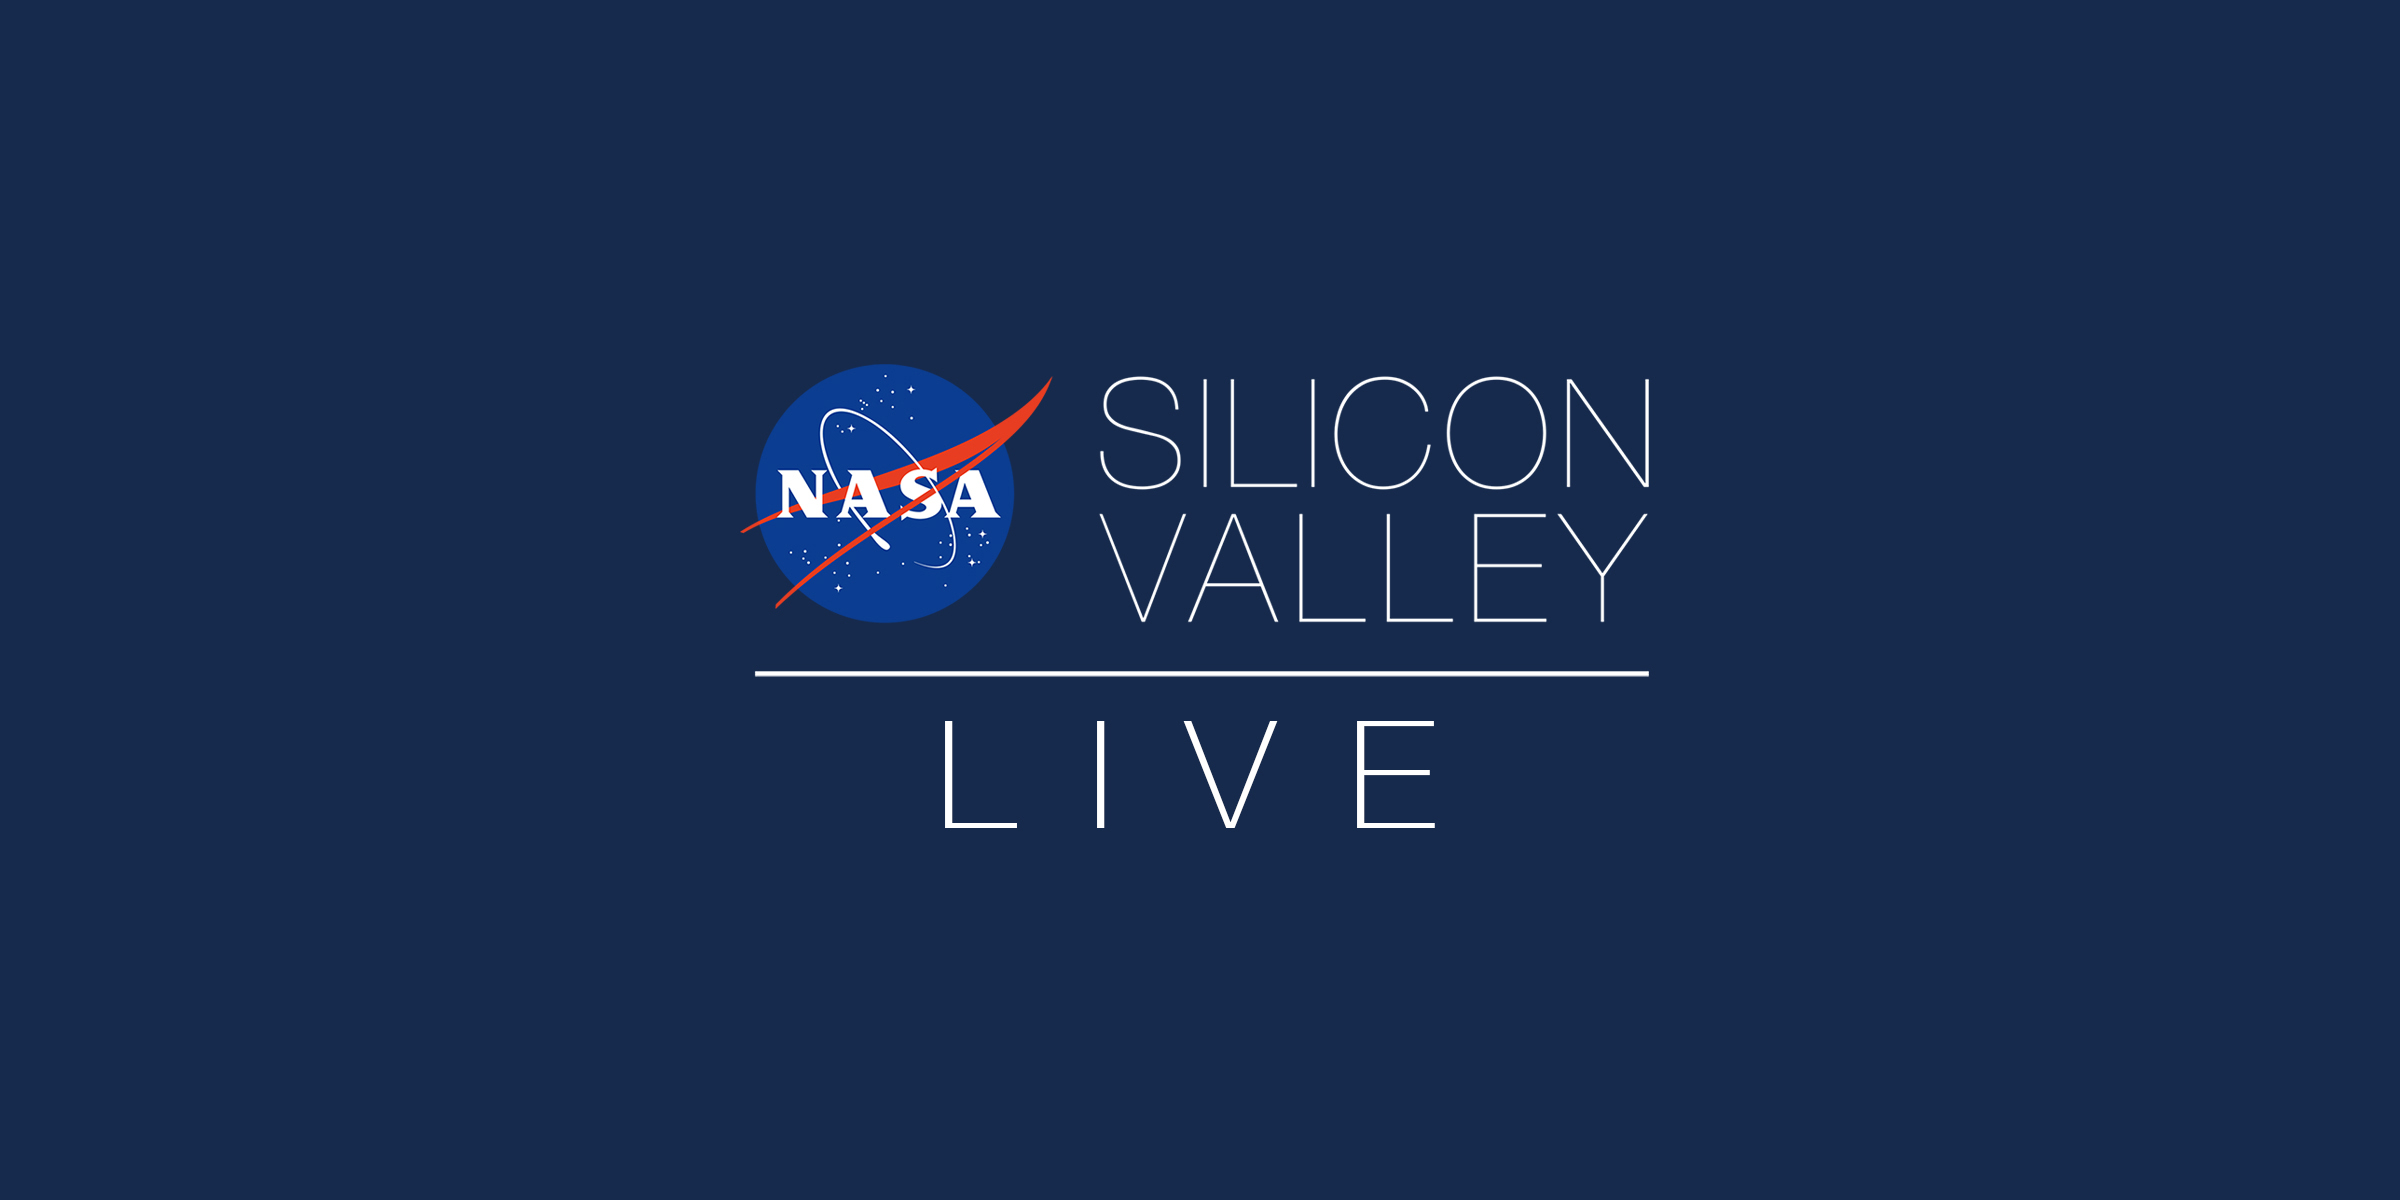 NASA in Silicon Valley Live - The Wonder Women of NASA